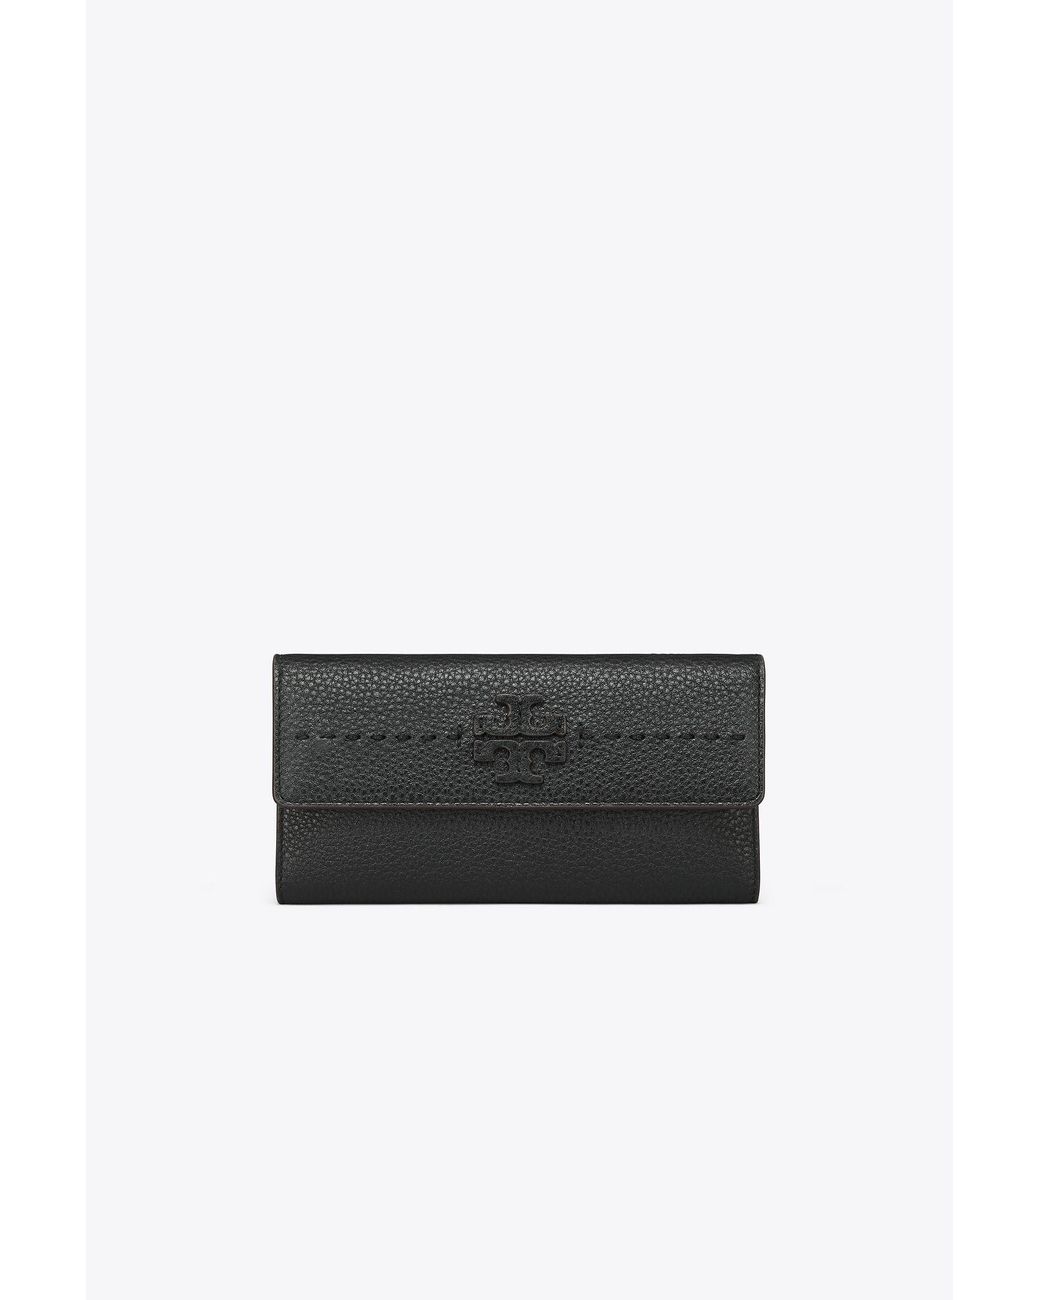 Tory Burch Mcgraw Slim Envelope Wallet | 288 | Continental in Black | Lyst